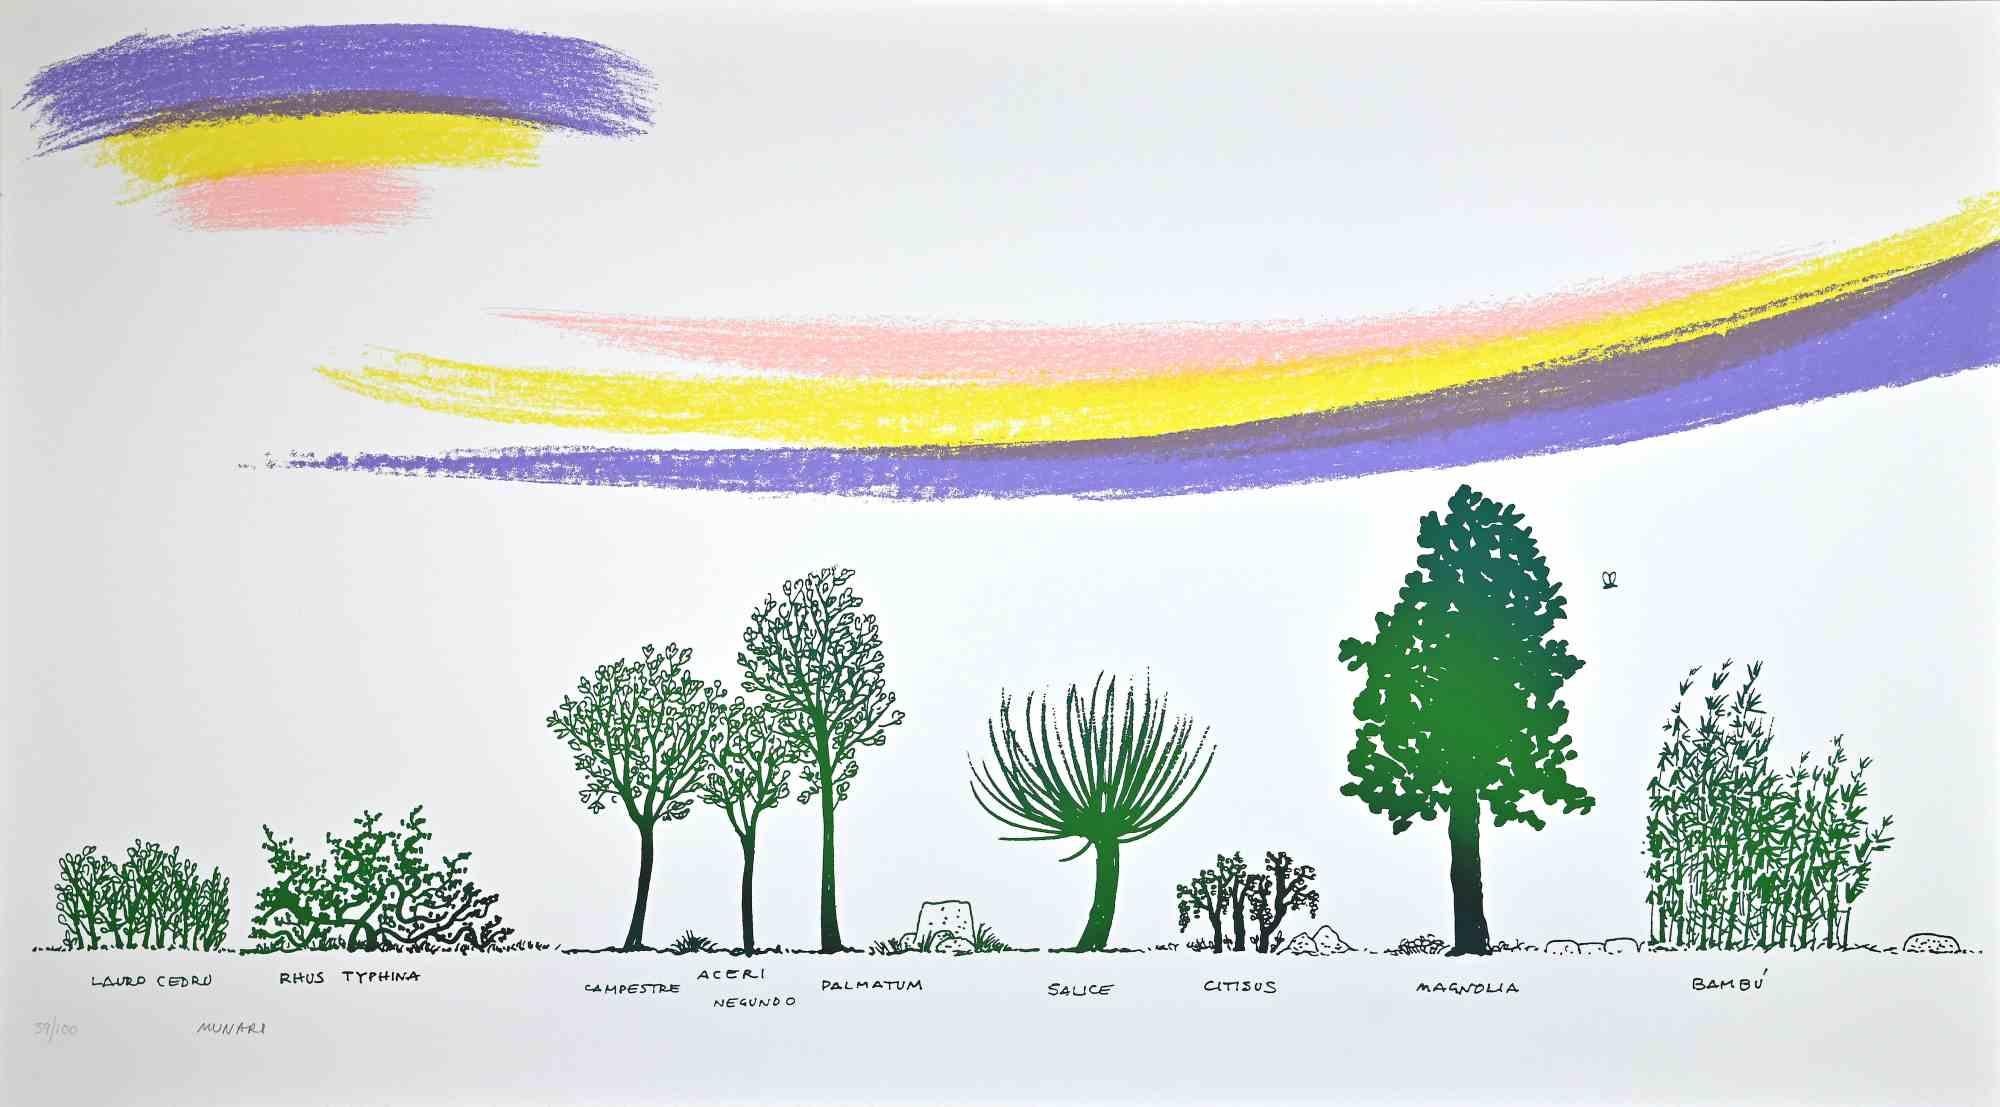 bruno munari drawing a tree